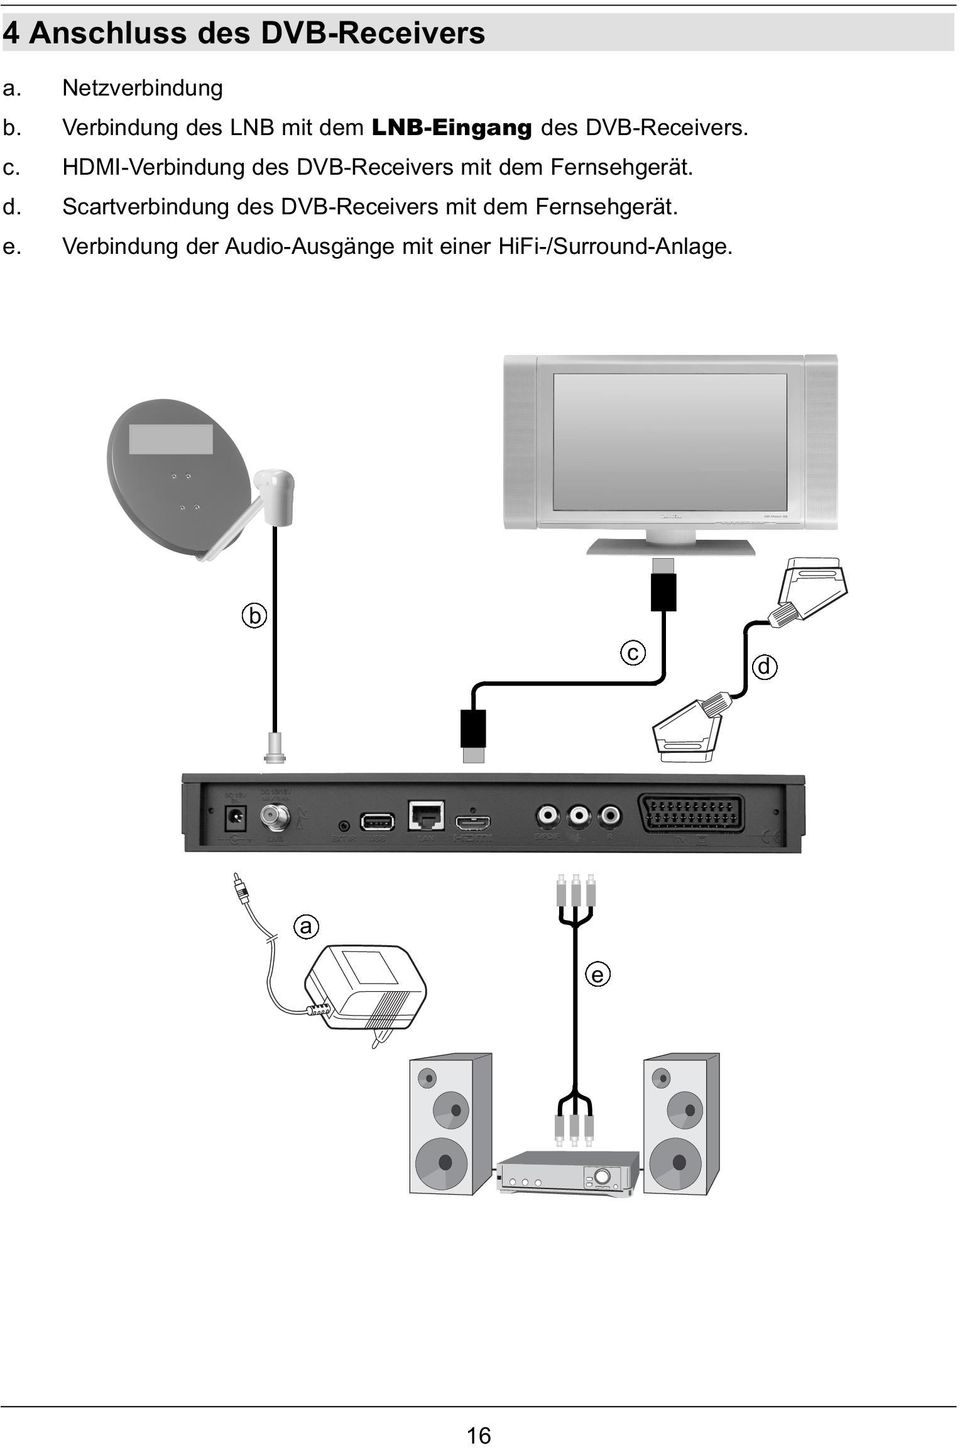 HDMI-Verbindung des DVB-Receivers mit dem Fernsehgerät. d. Scartverbindung des DVB-Receivers mit dem Fernsehgerät.